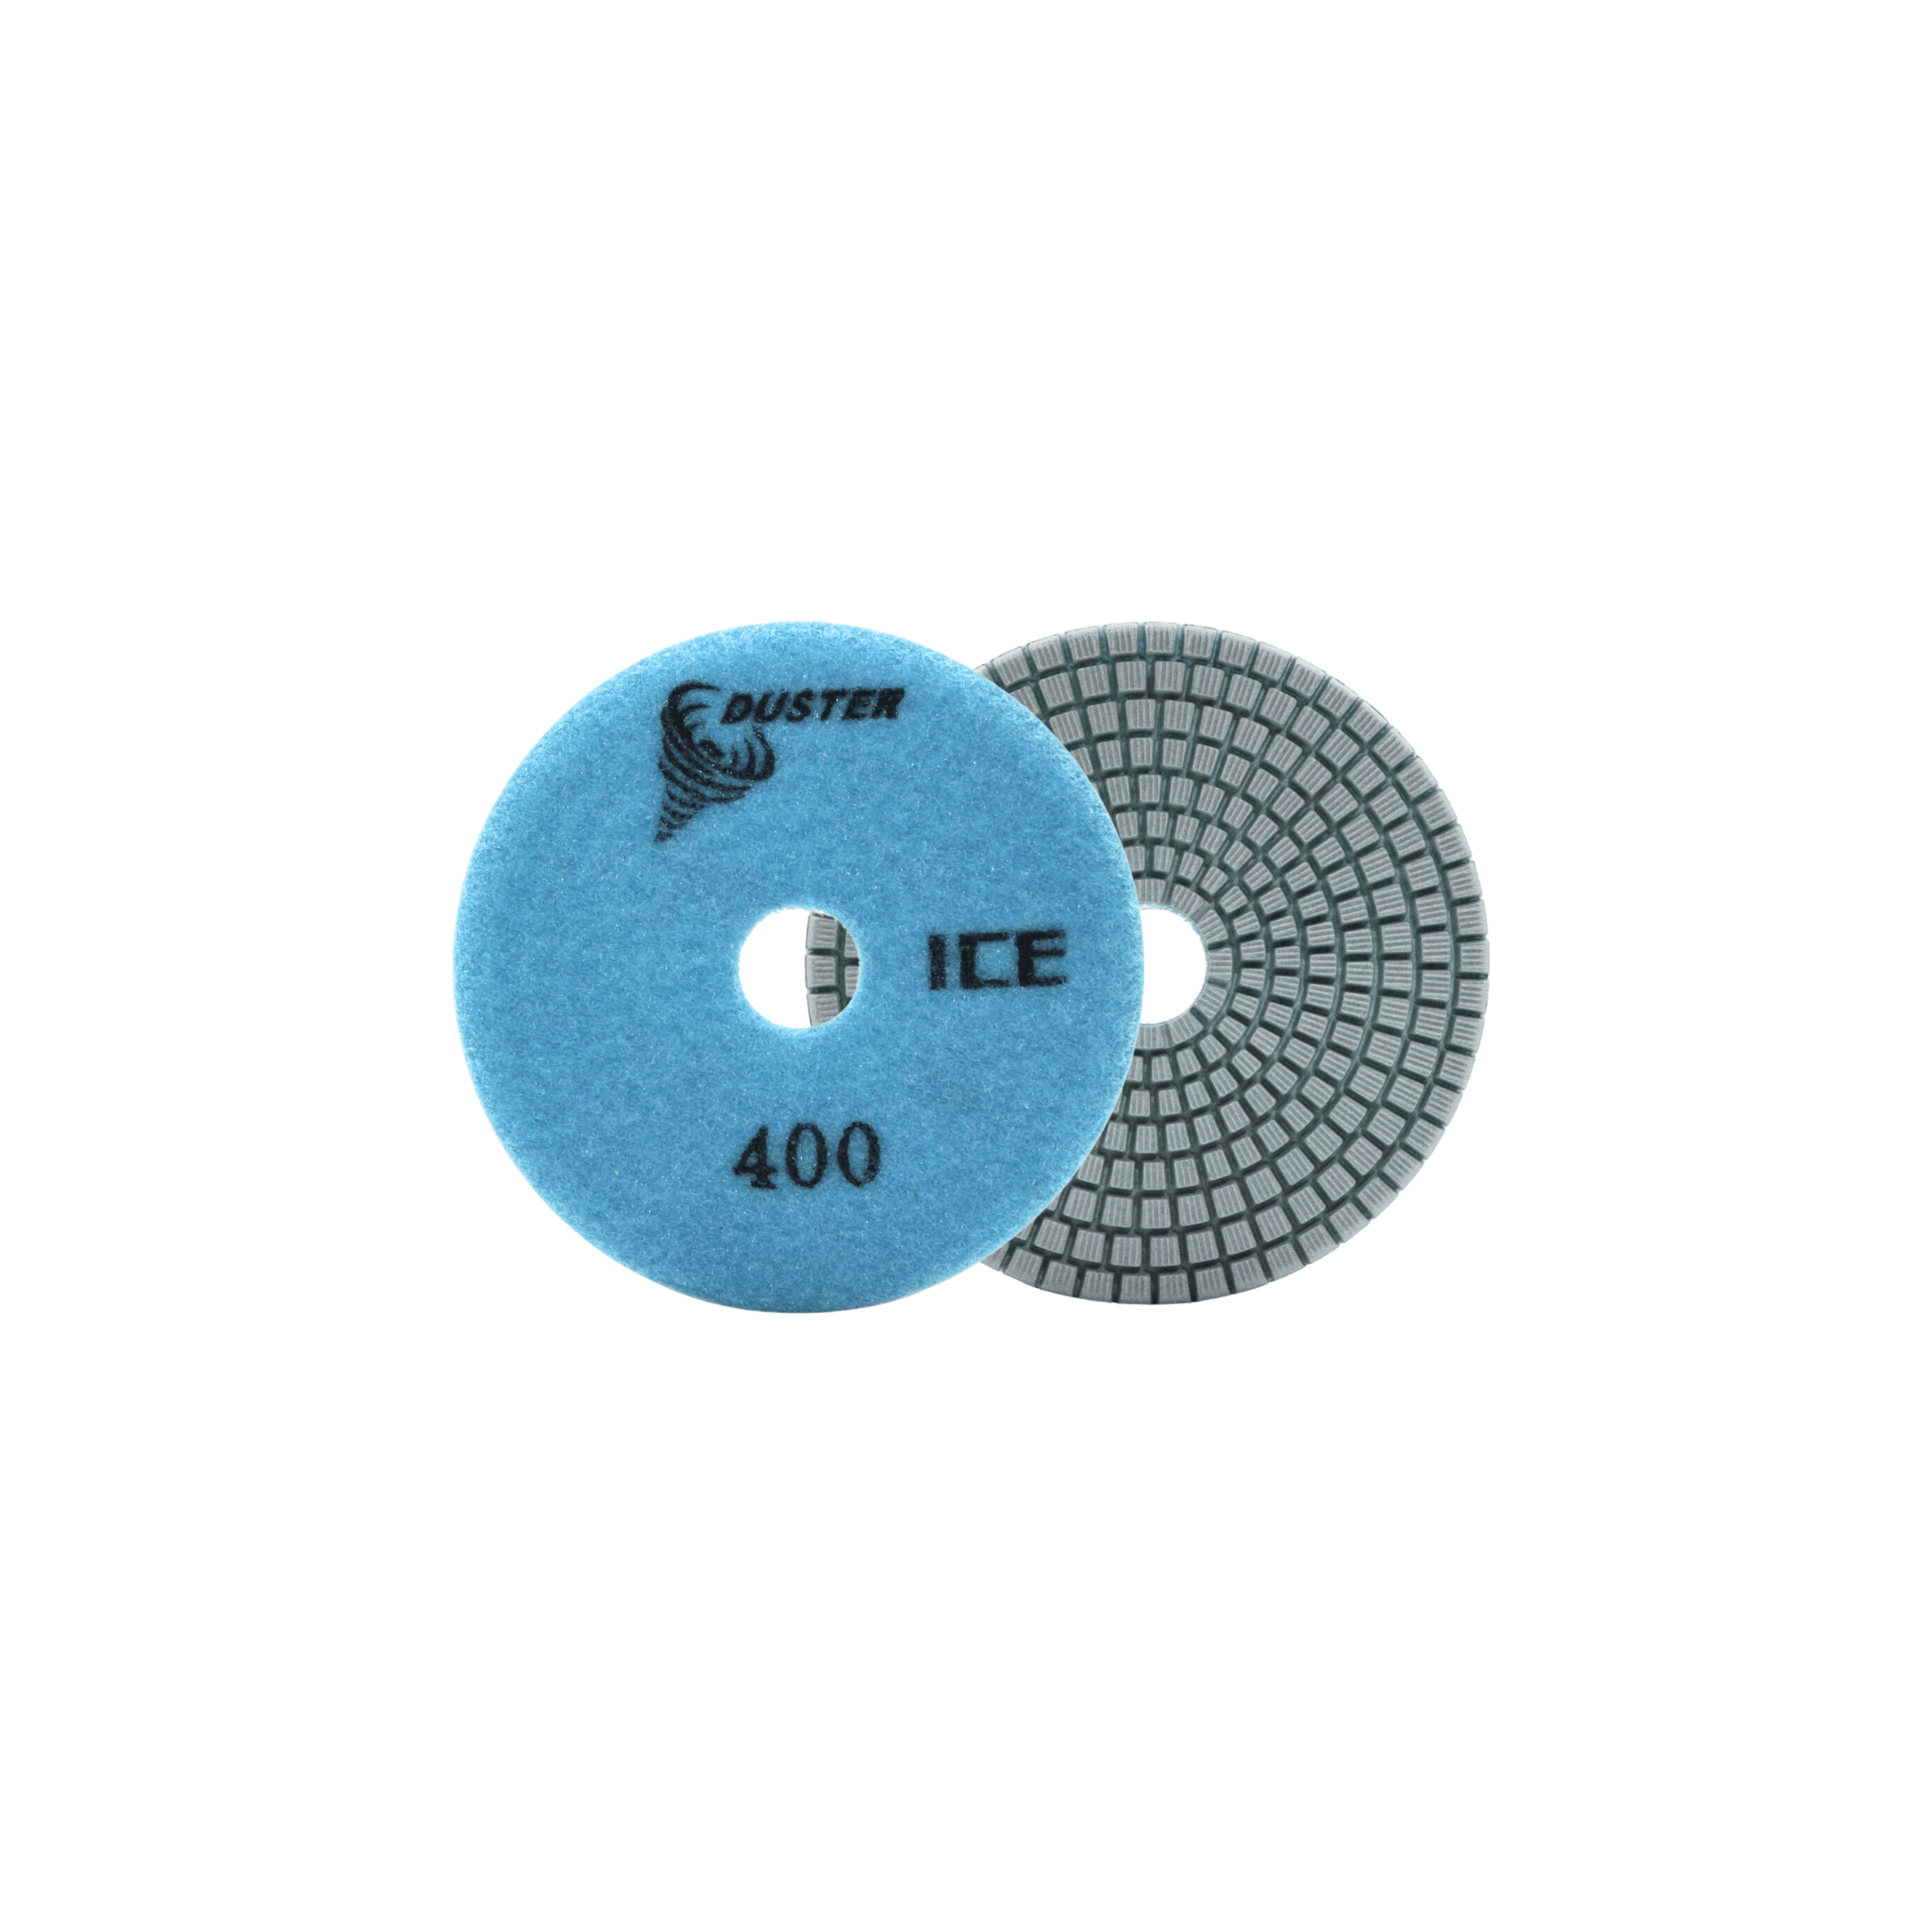 Duster Ice ES Polishing Pad 4" 400 Grit - Direct Stone Tool Supply, Inc